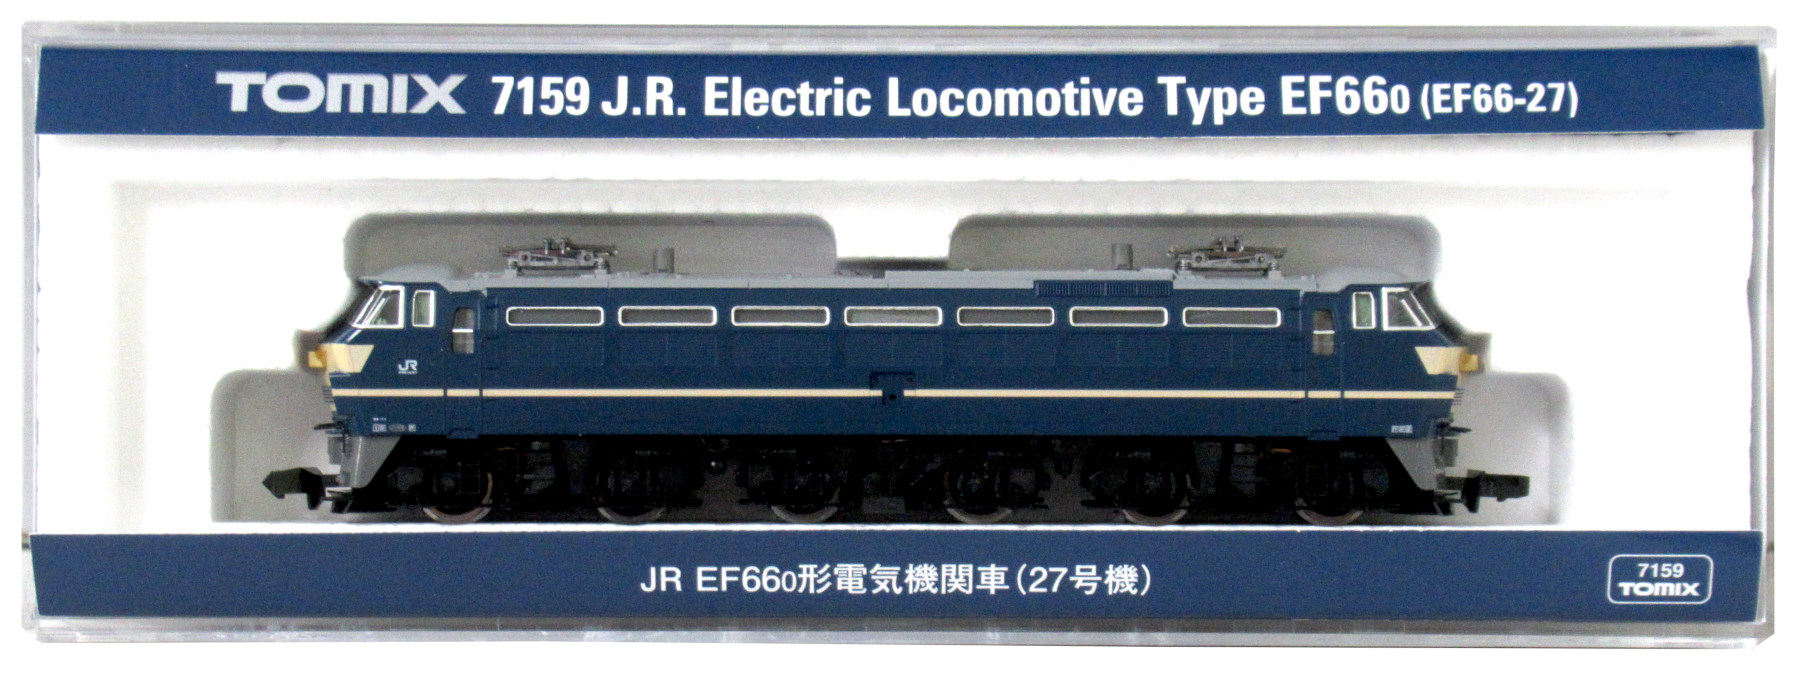 7159EF66-0形(27号機)